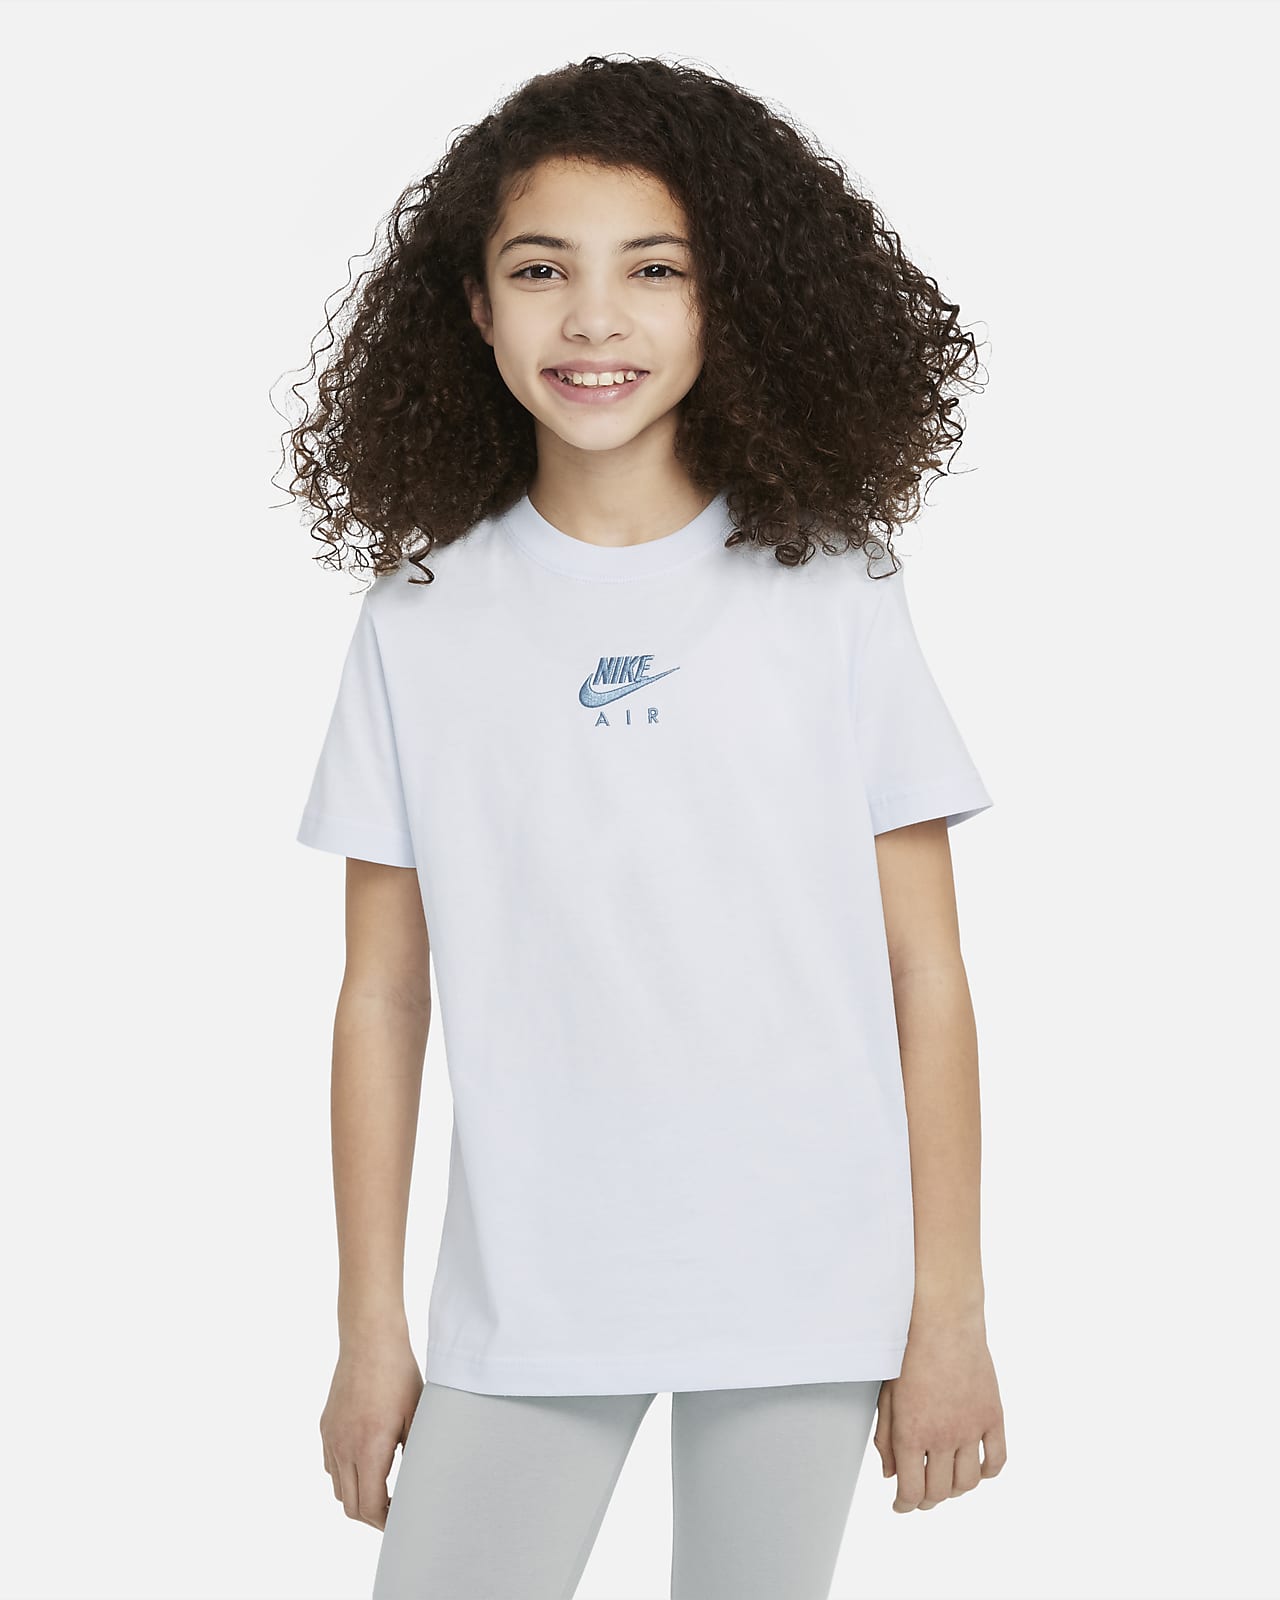 Nike Air 大童 (女童) T 恤